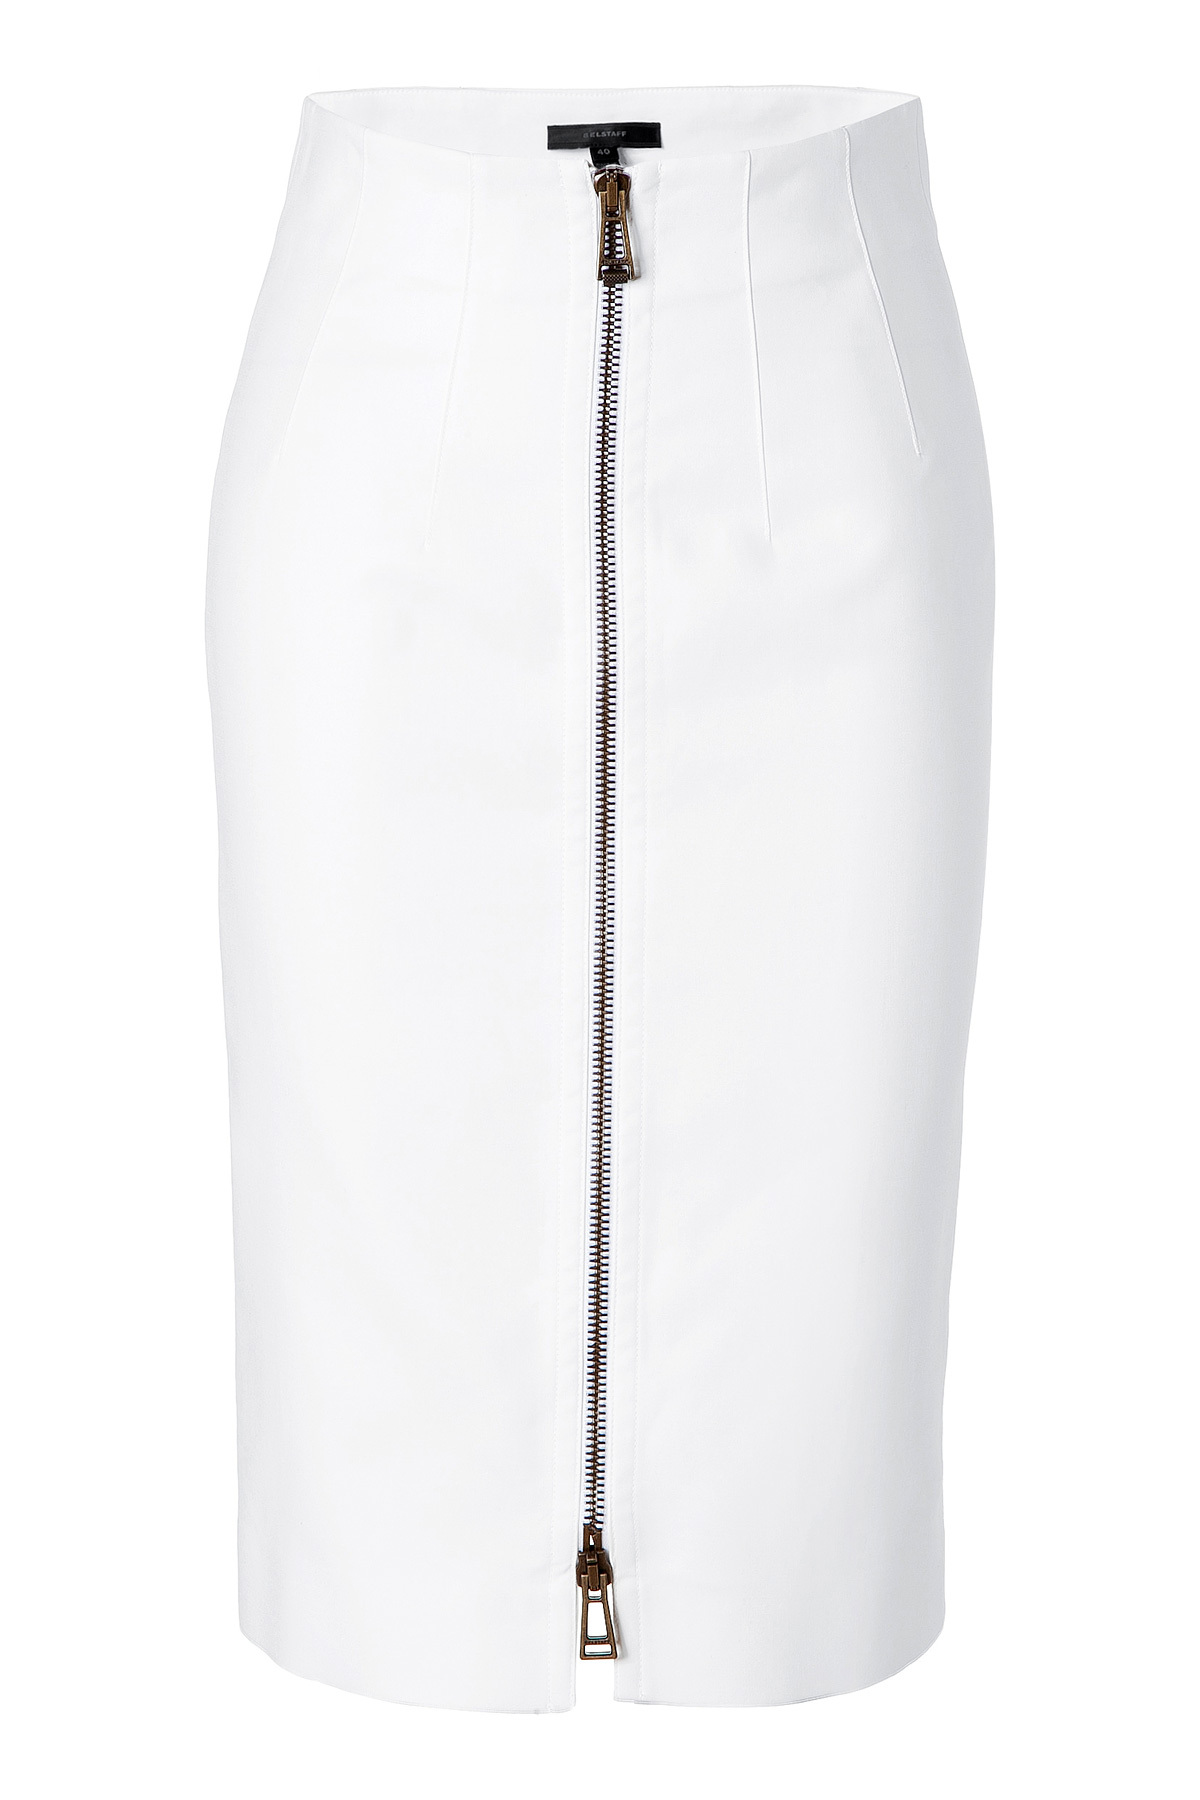 Belstaff White Cotton Harrow Pencil Skirt in White | Lyst